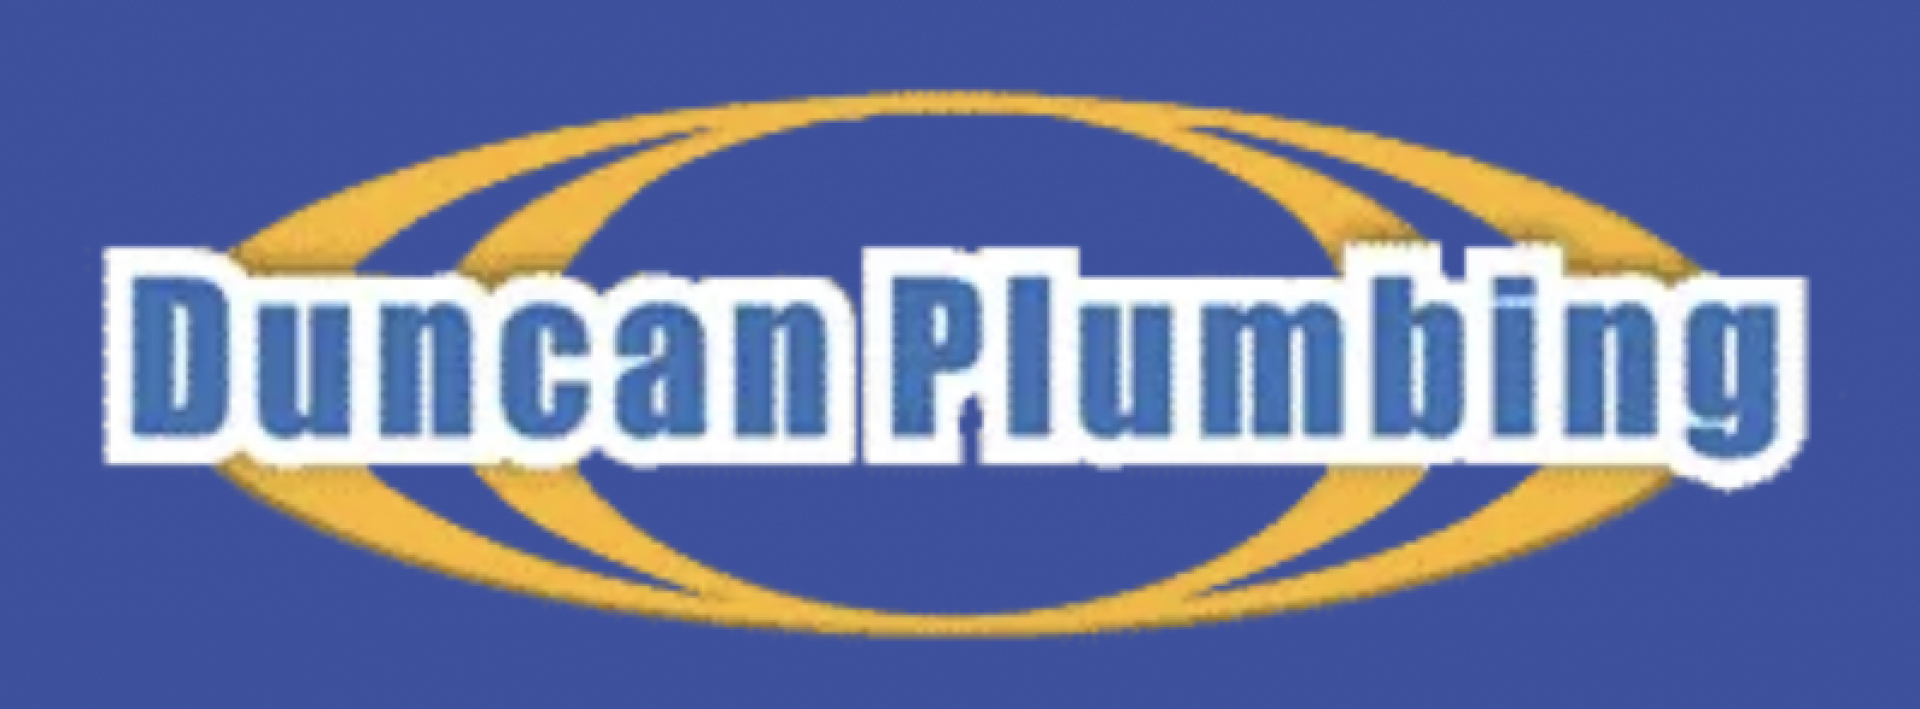 Duncan Plumbing Enterprises Inc company logo